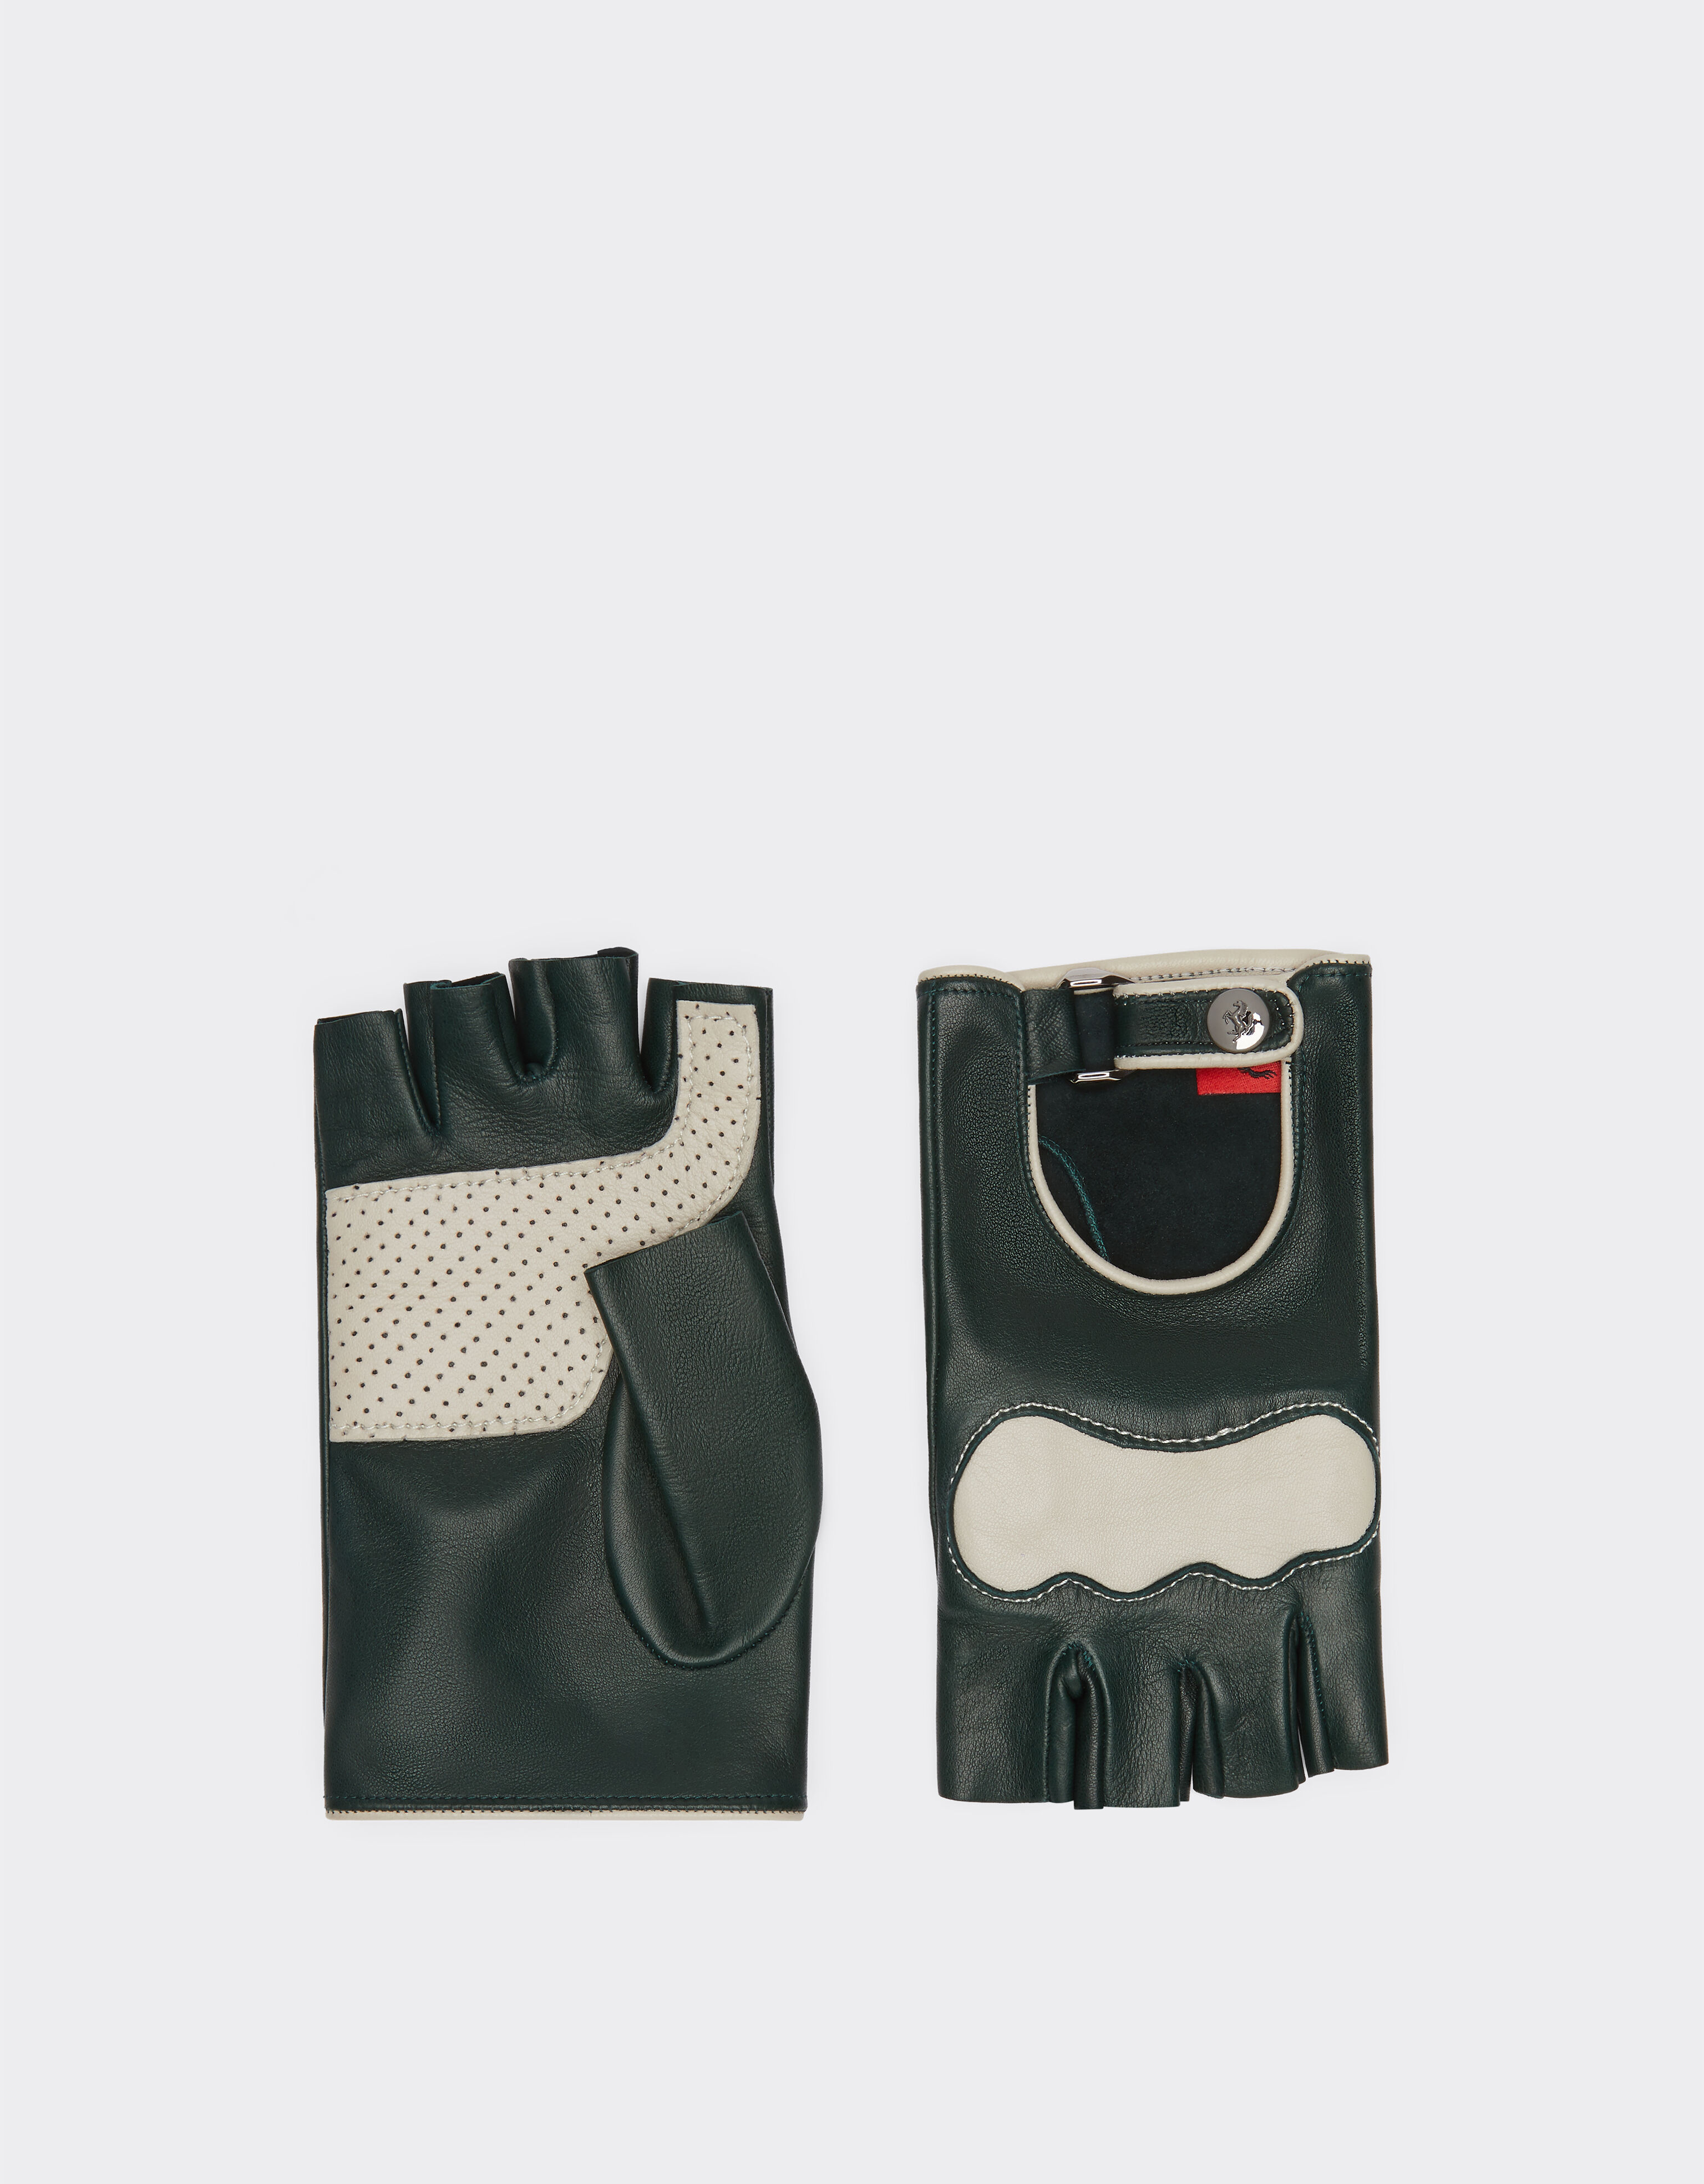 Ferrari Nappa leather driving gloves Verde militar 21351f